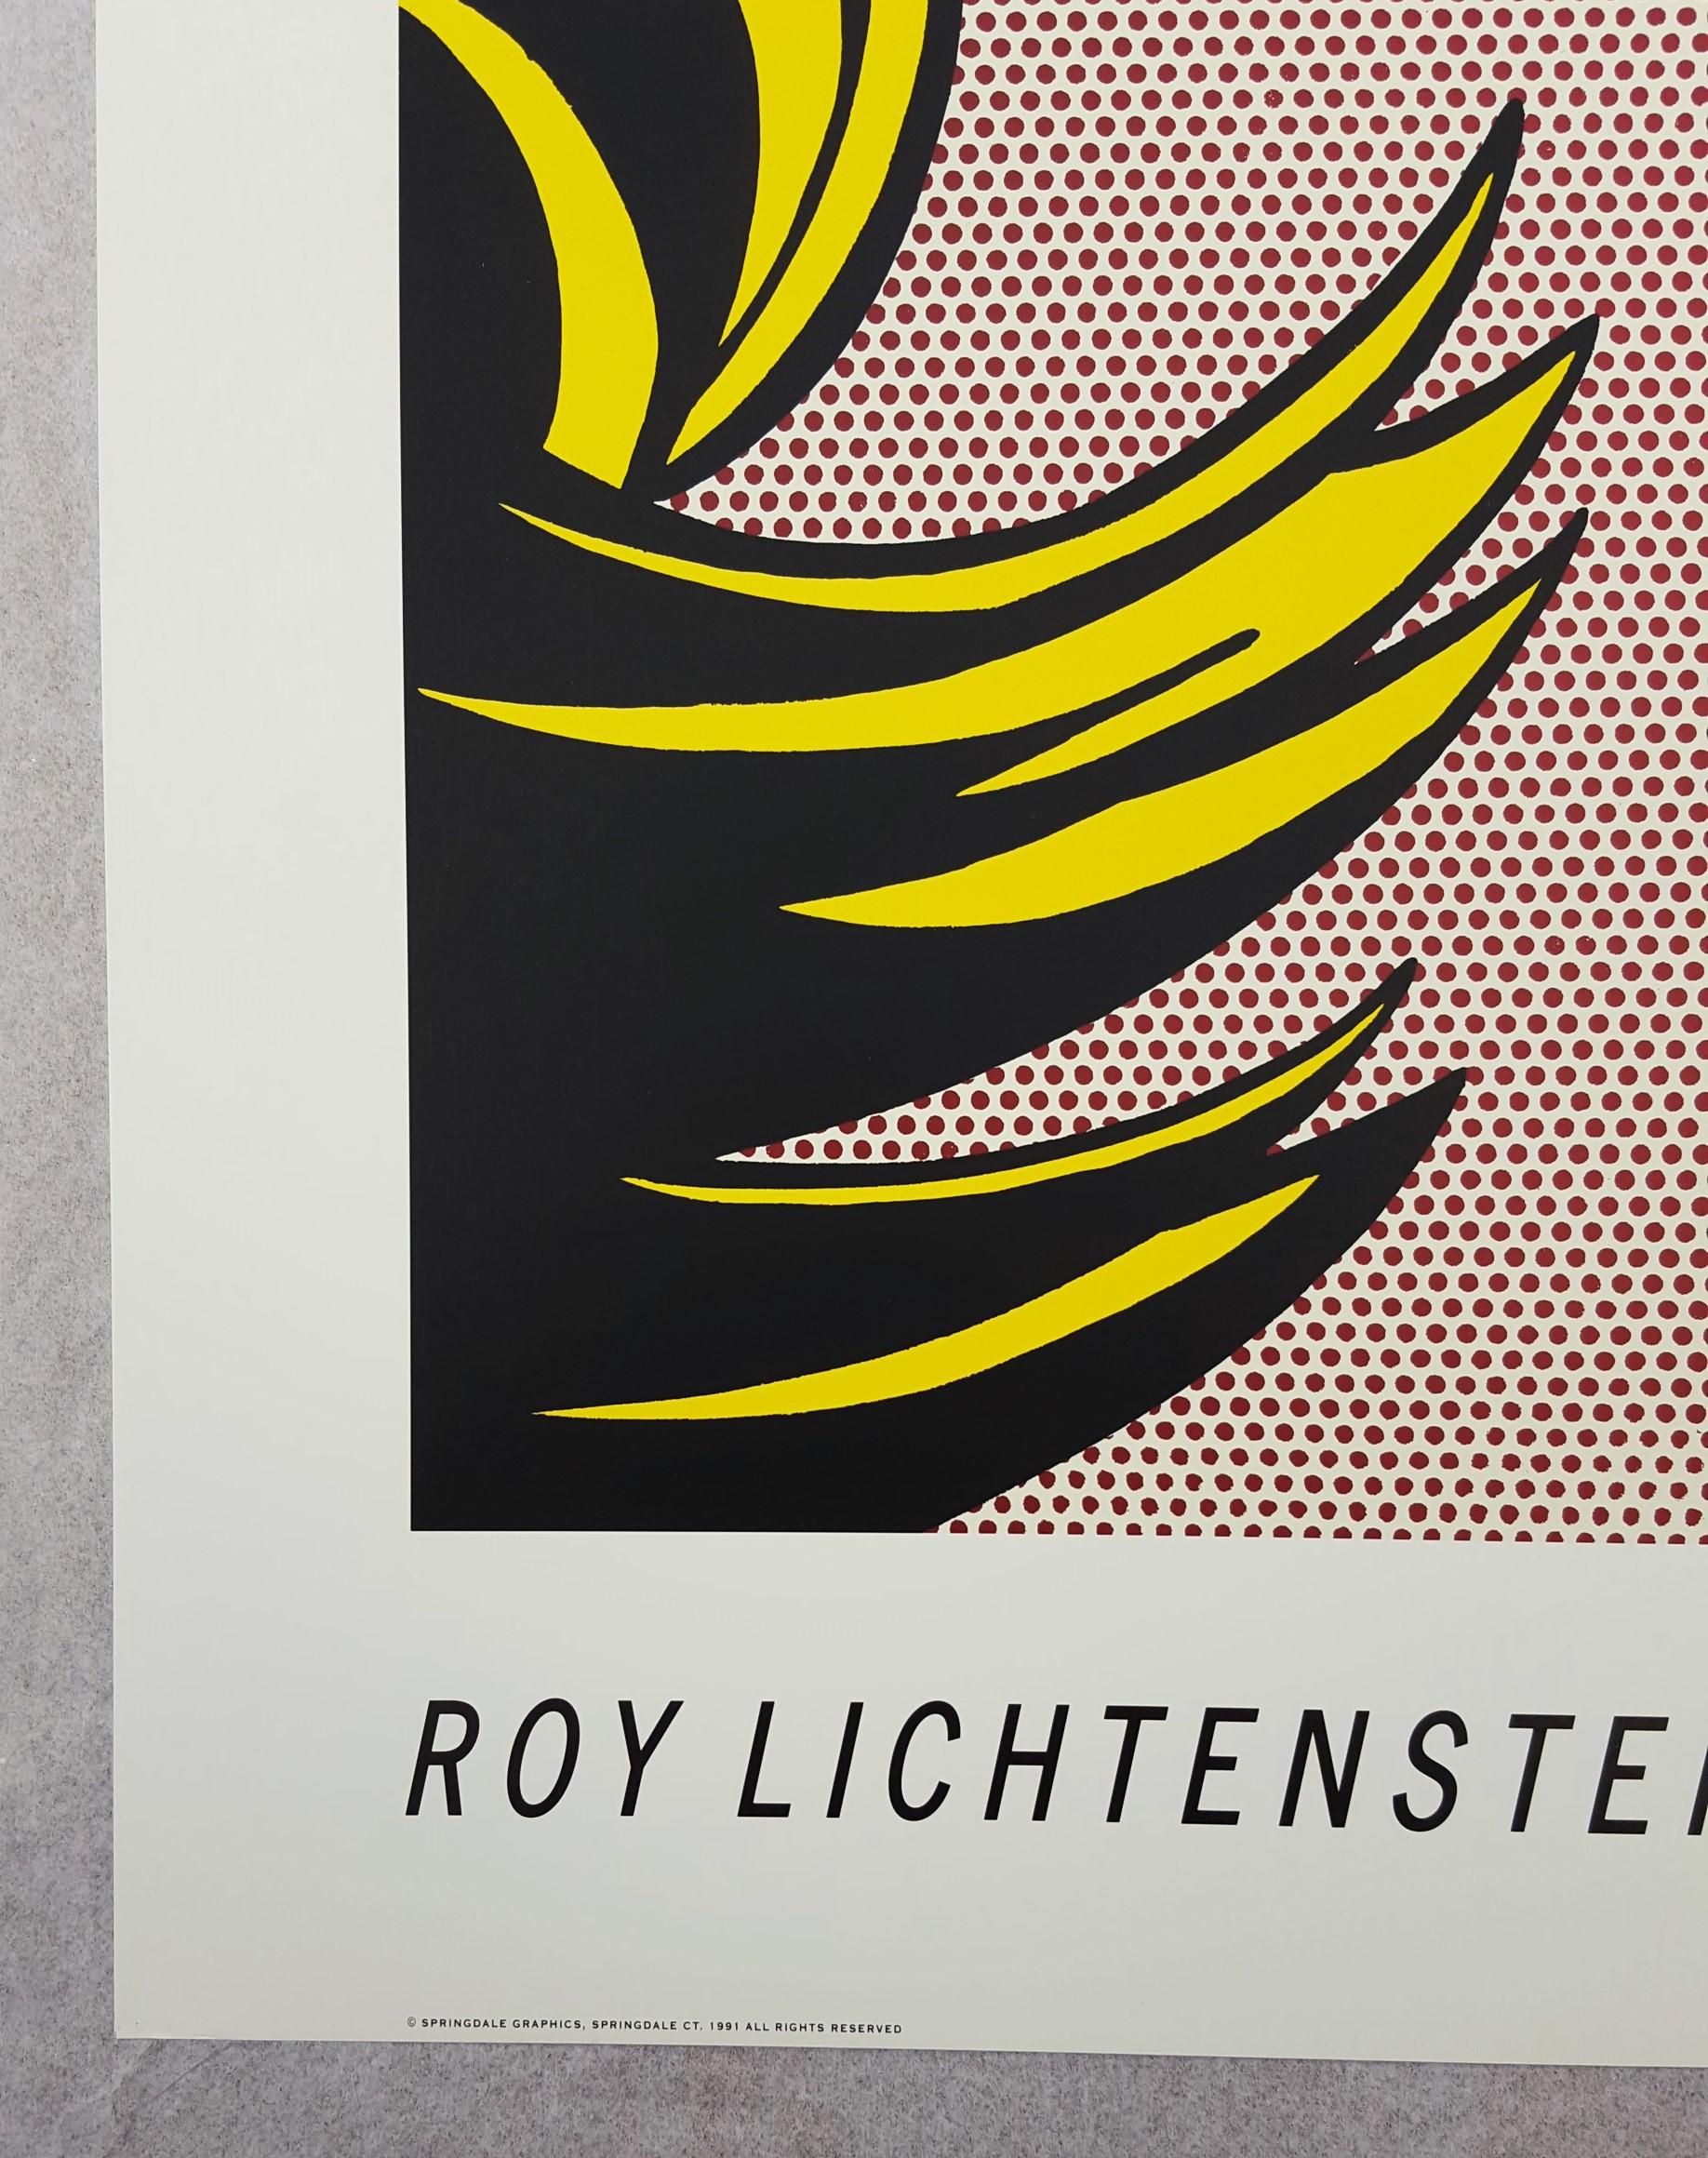 Yale University Art Gallery (Thinking of Him) Poster - Pop Art Print by (after) Roy Lichtenstein